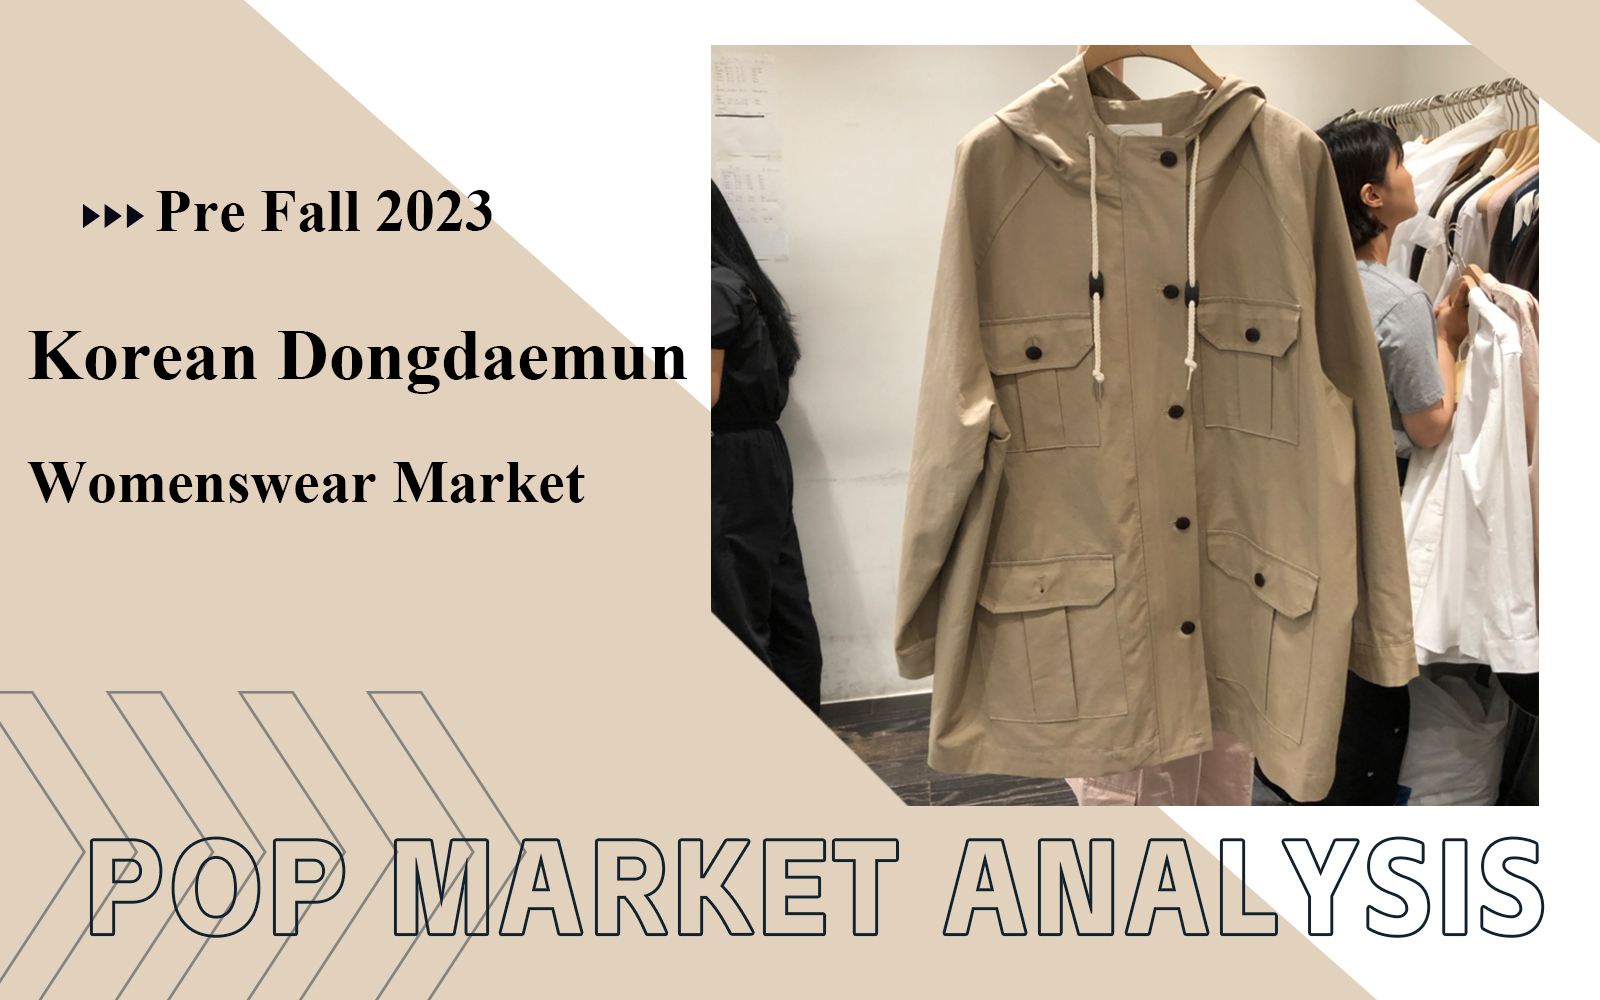 The Womenswear Market Analysis of Korean Dongdaemun August New Arrivals